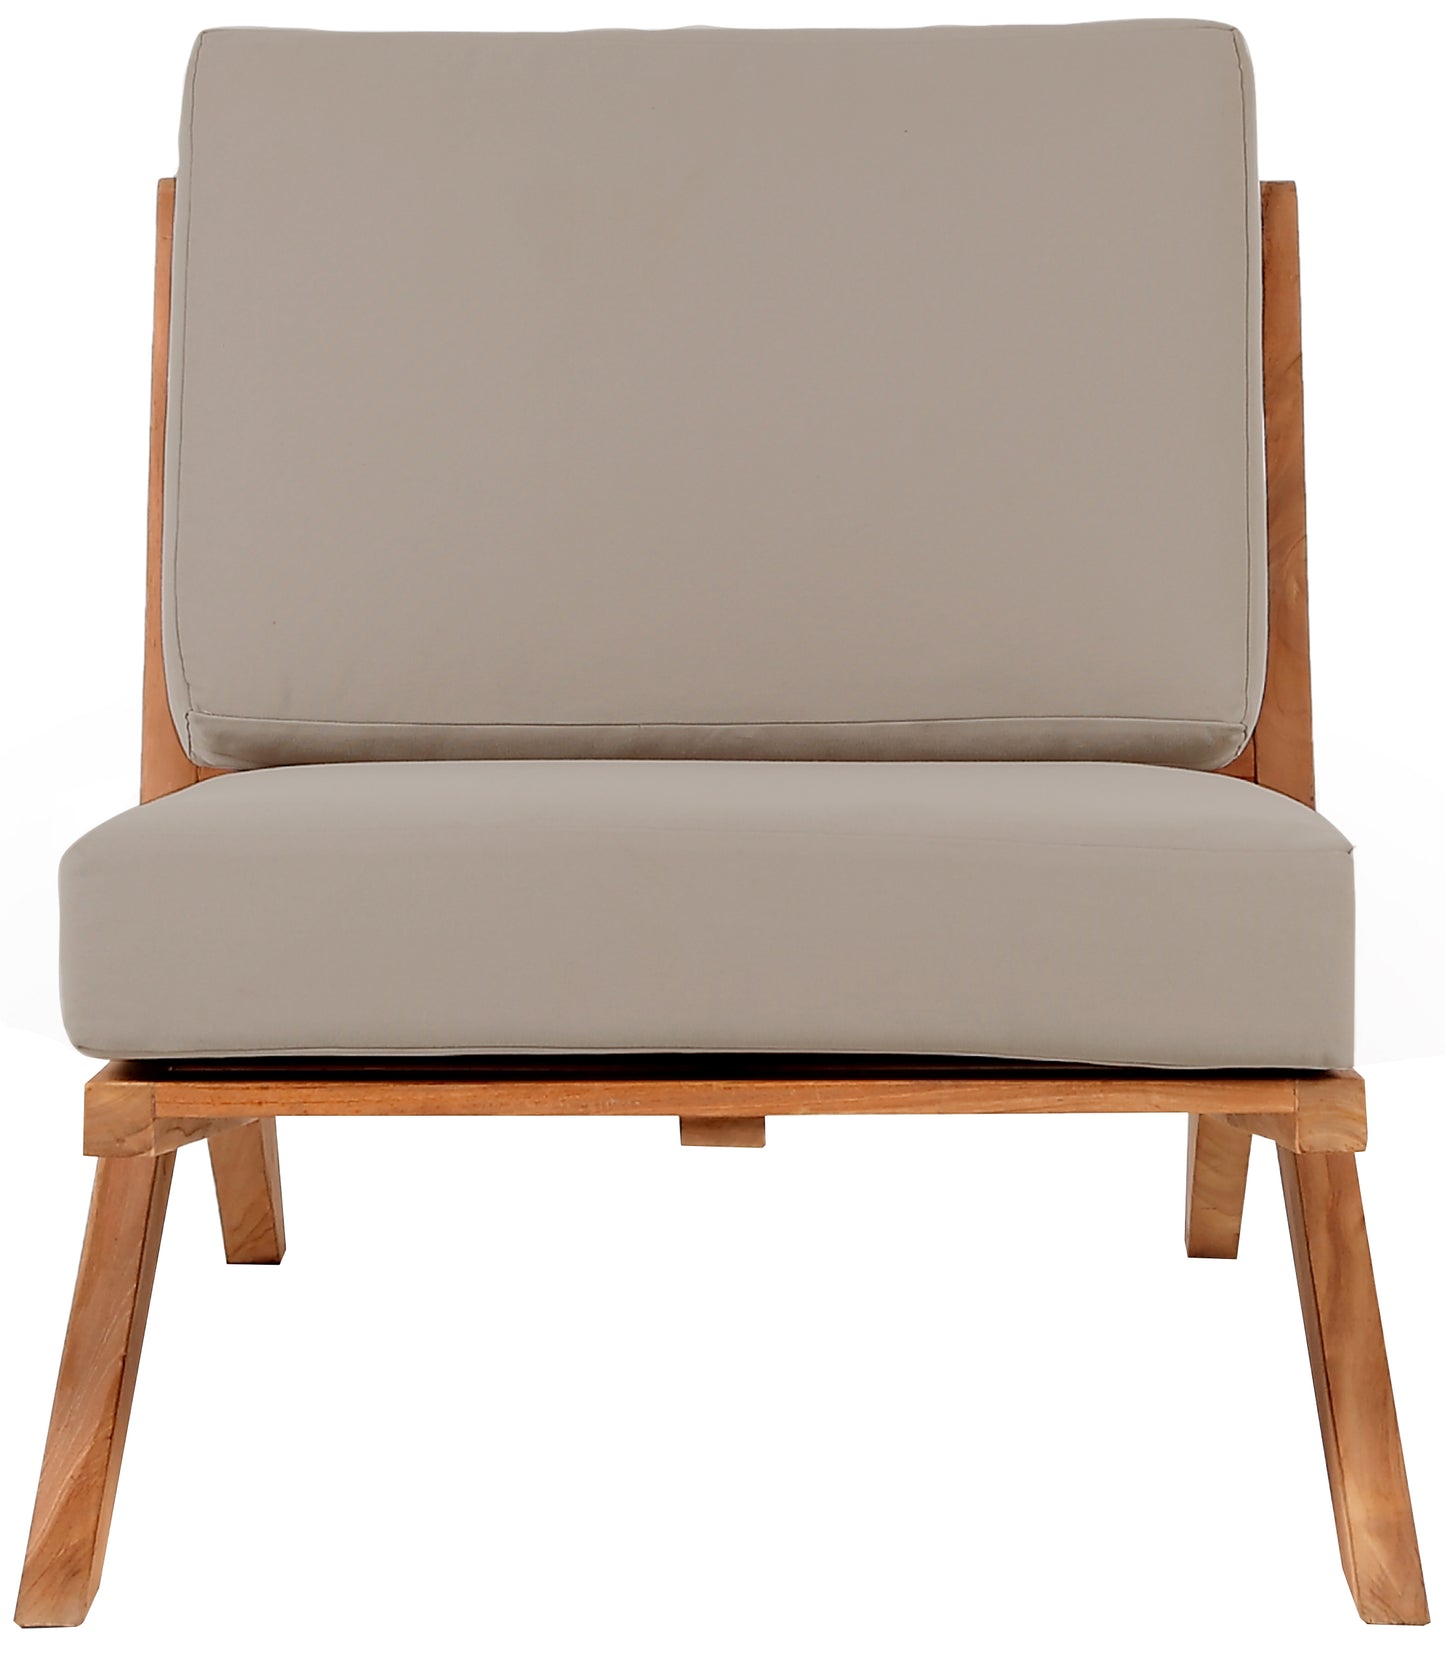 gigi grey water resistant fabric outdoor chair c